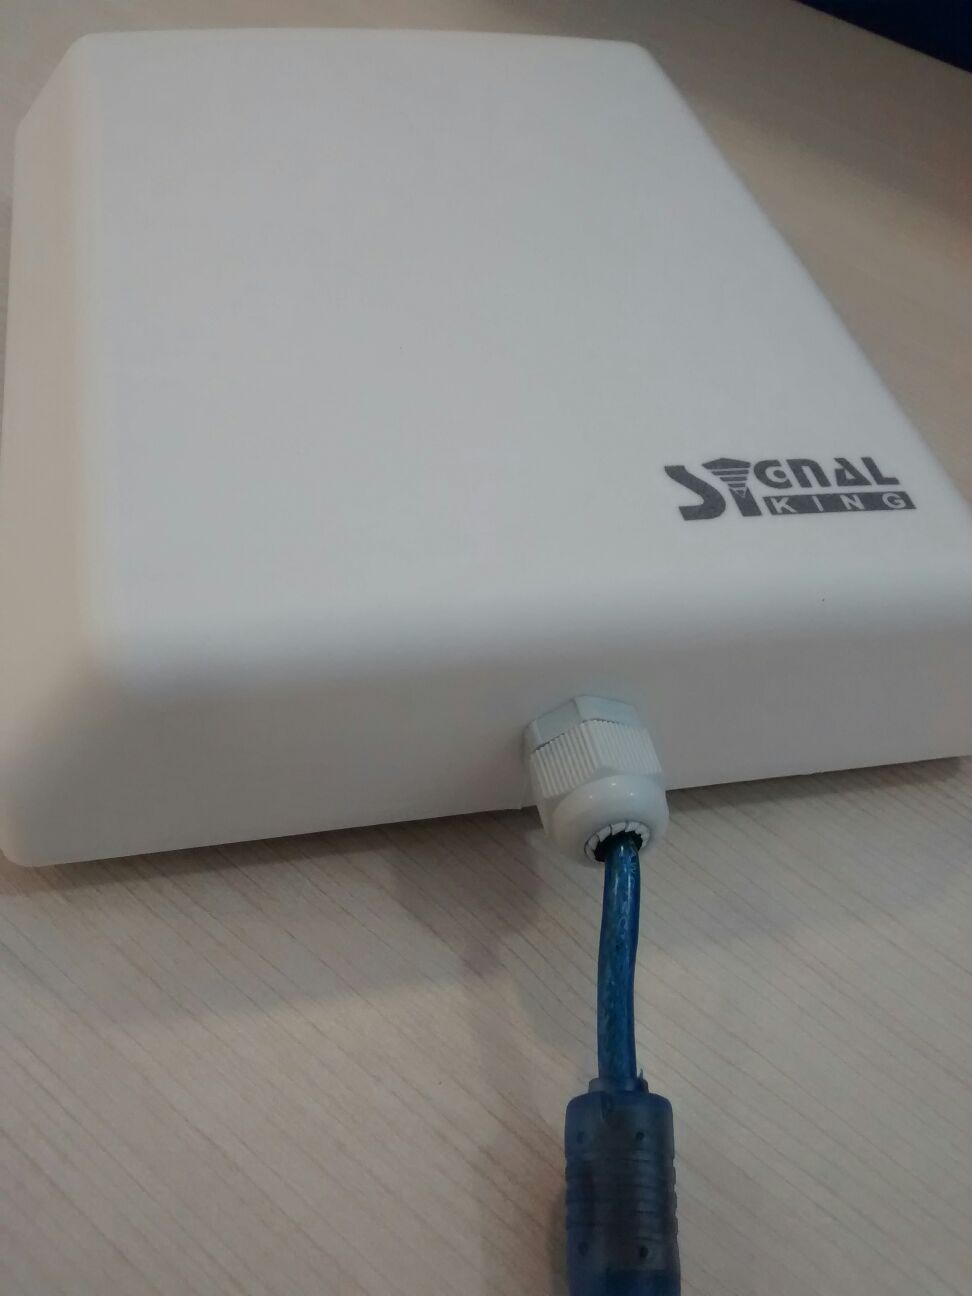 Signal King SK 10TN Antena WiFi USB largo alcance 10 metros con